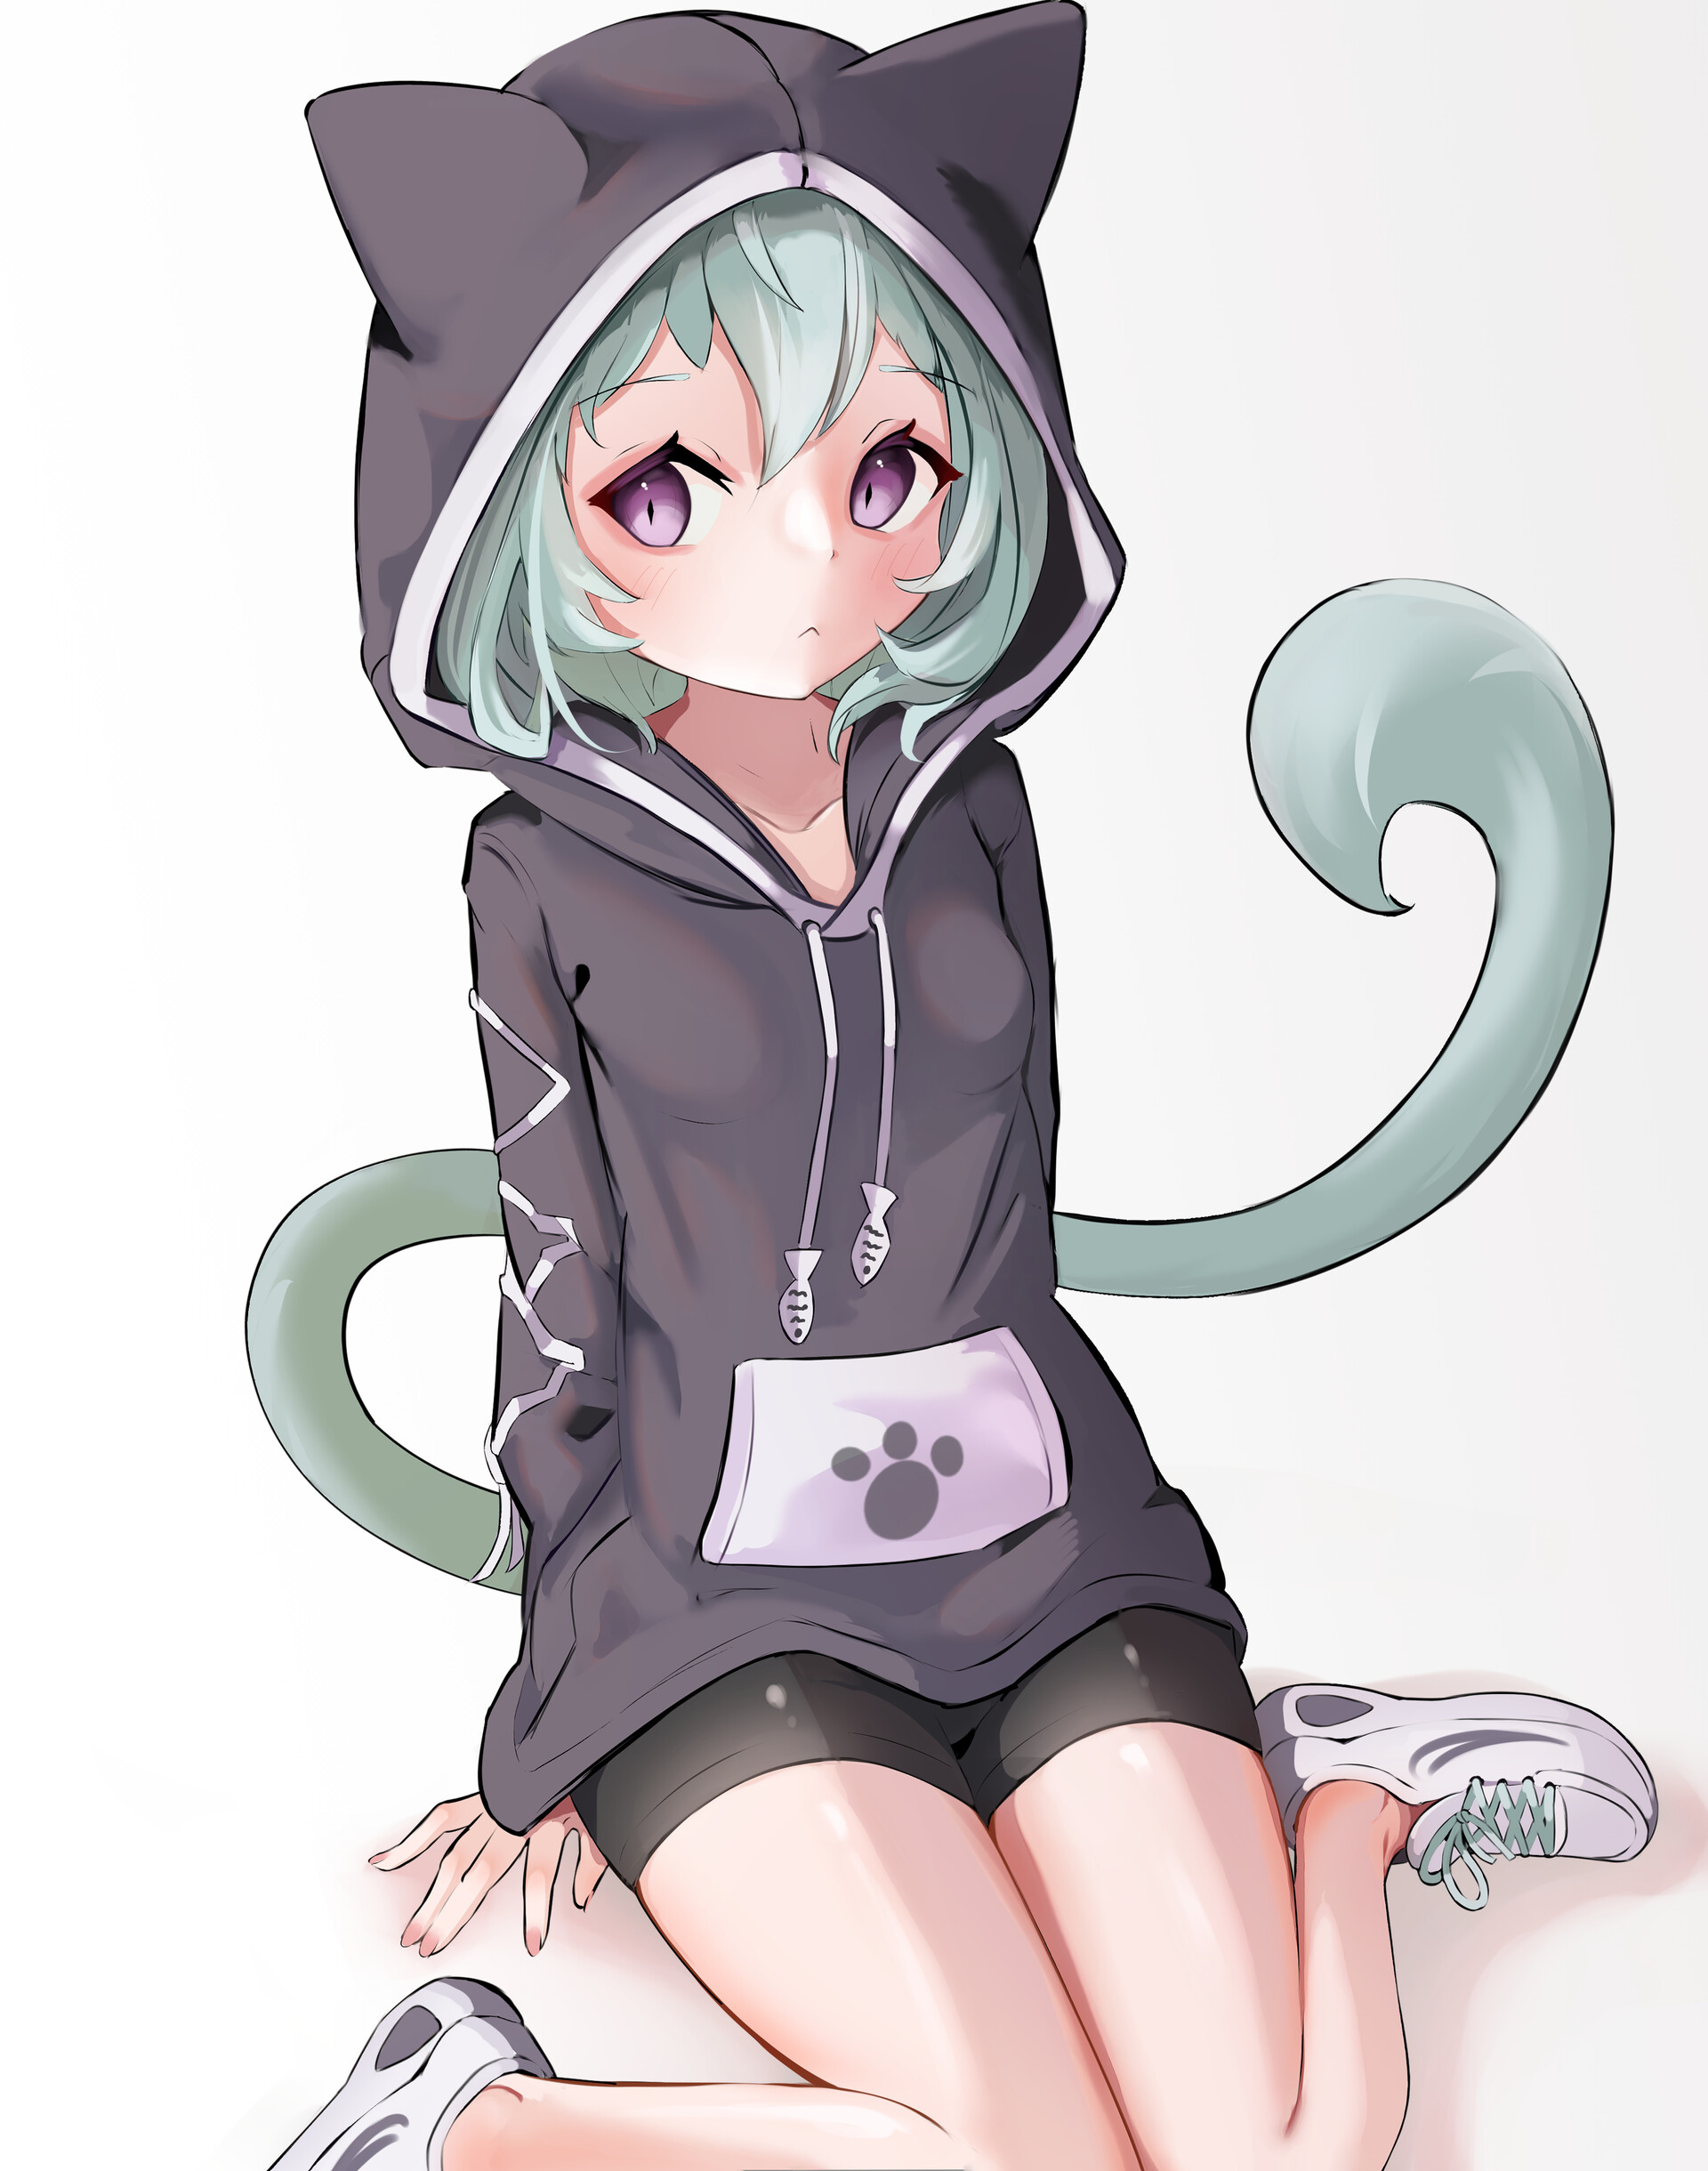 Girl039s Anime Neko Atsume Cute Cats Hoodies Coats Sweaters Stundets   eBay